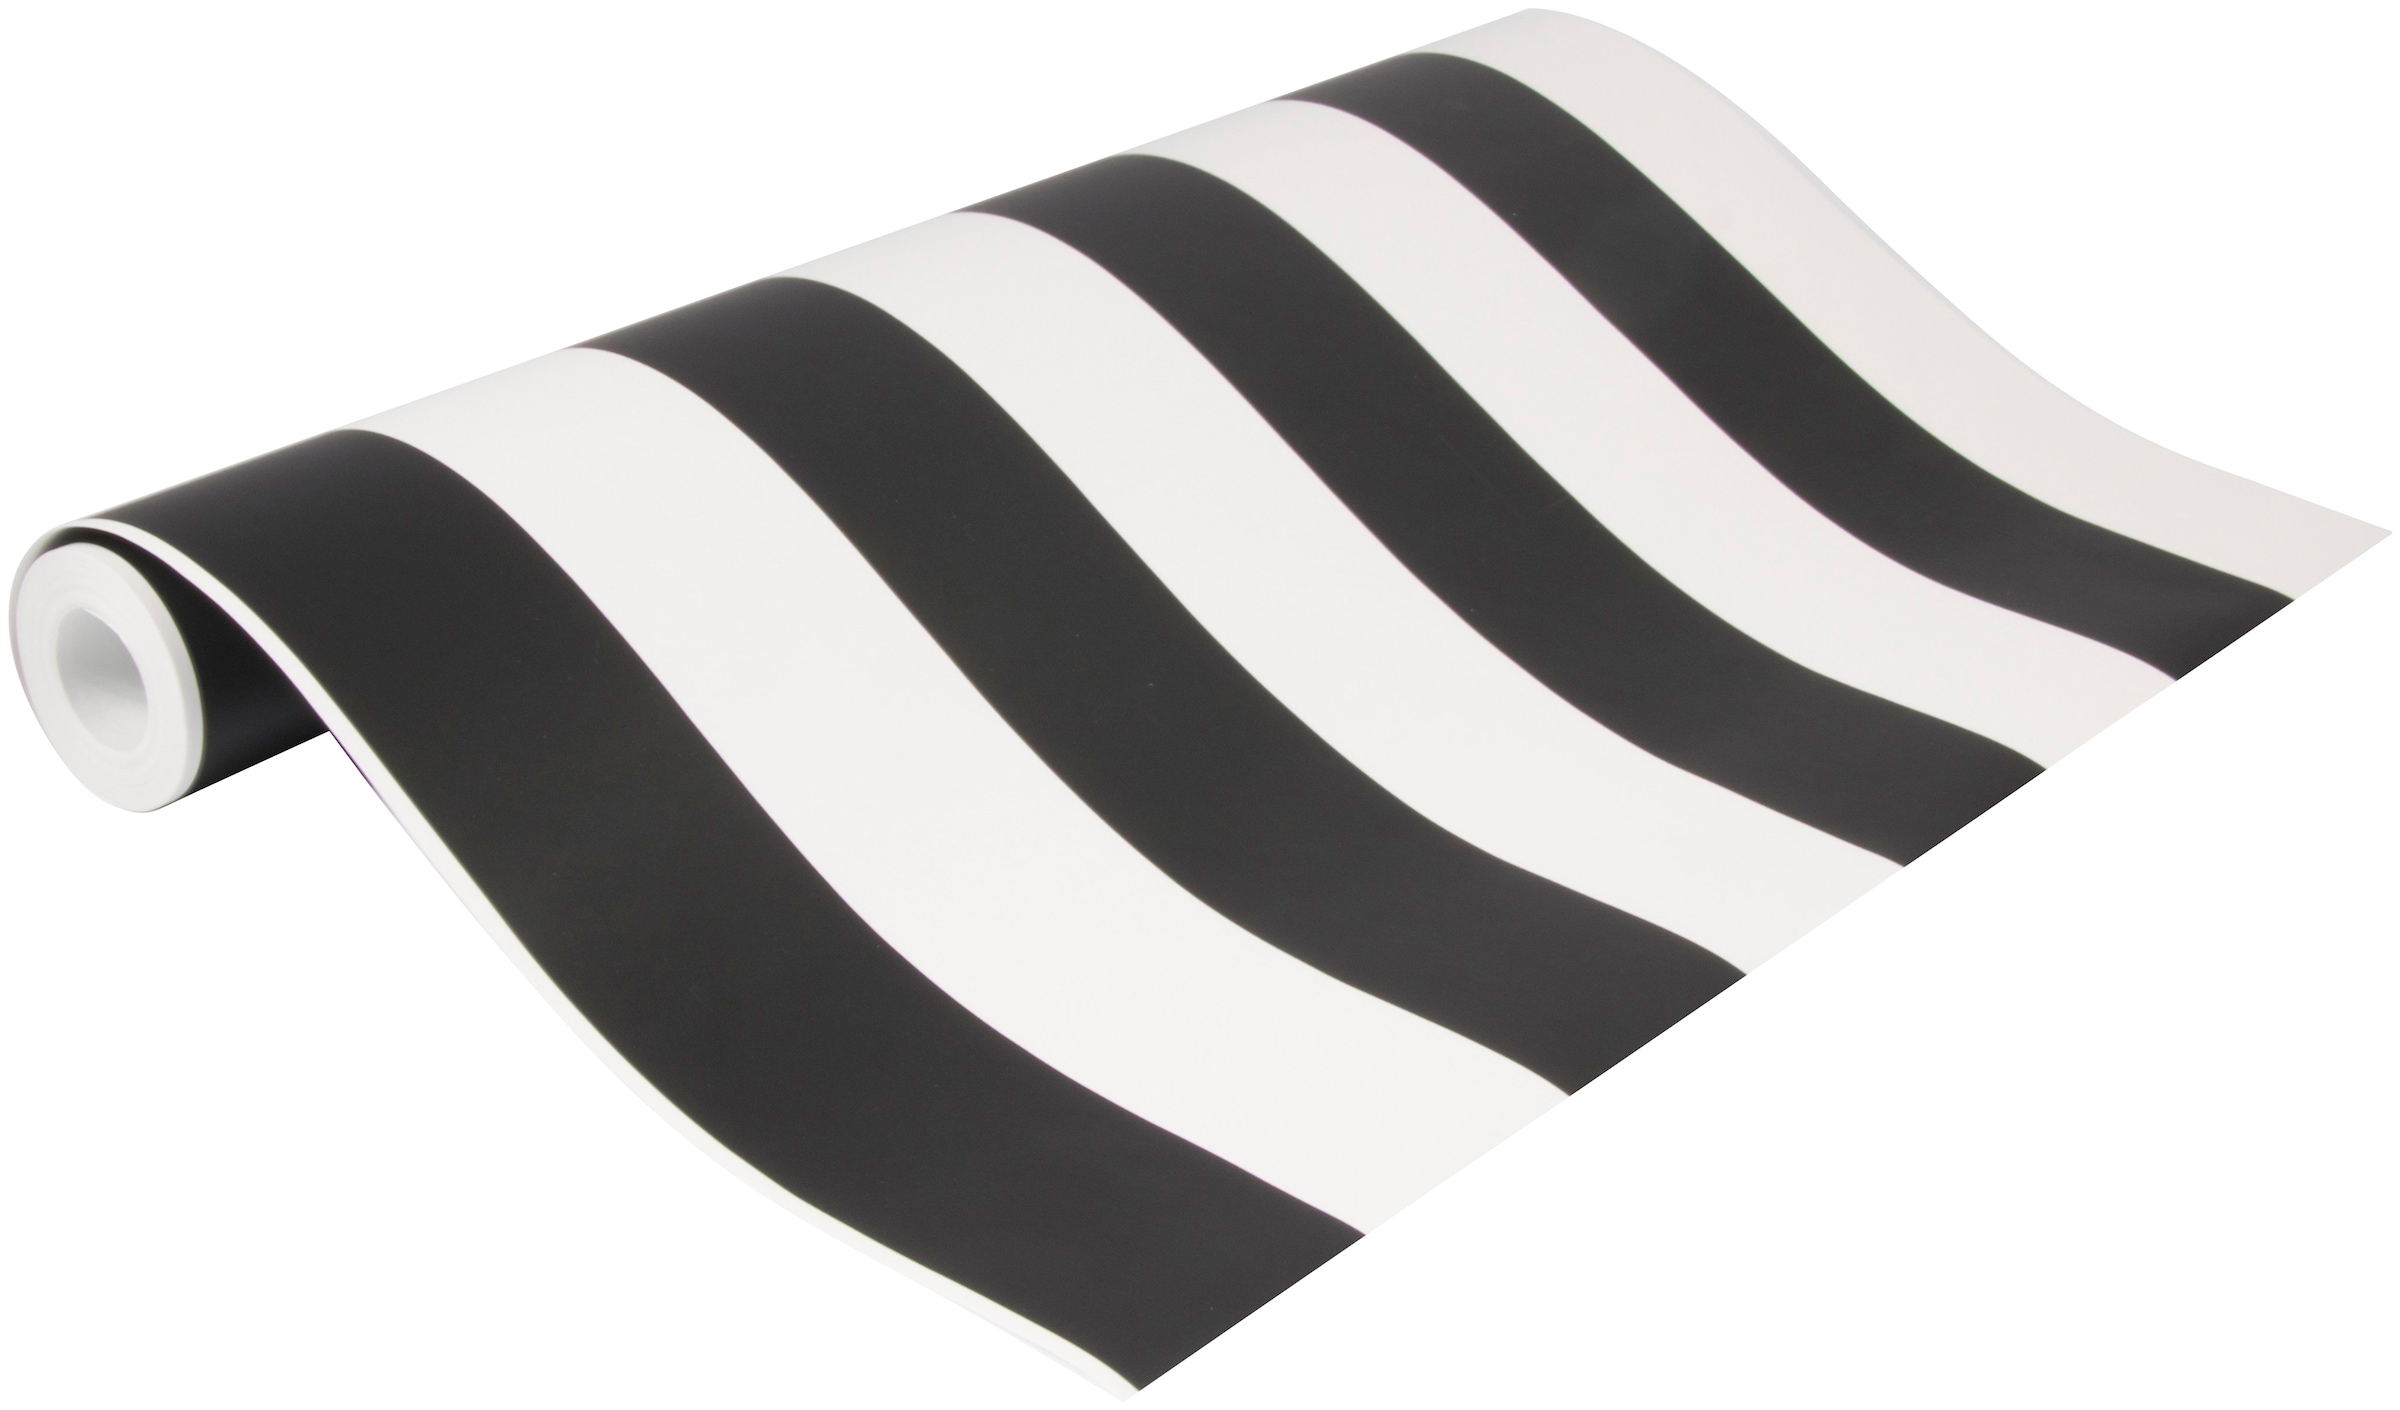 Superfresco Easy Vliestapete »Monochrome Stripe«, Streifen